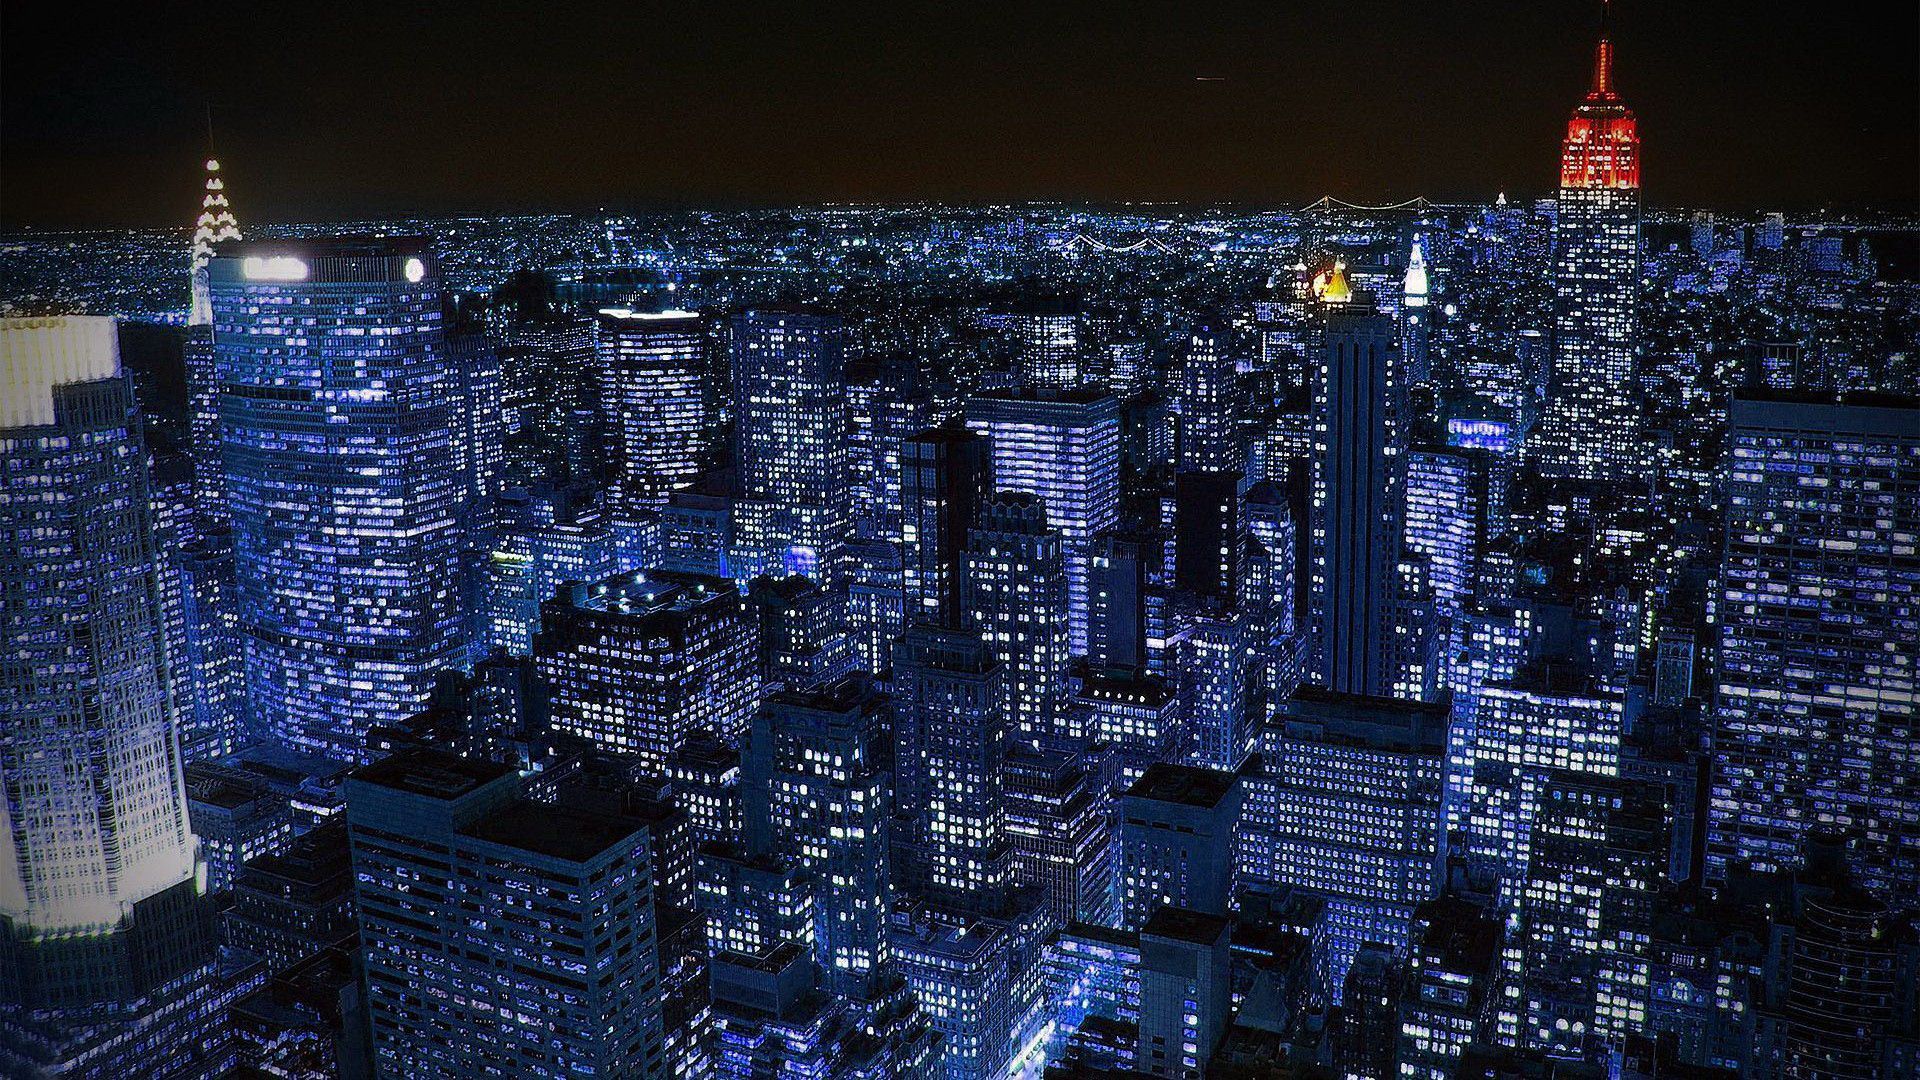 New York City At Night Desktop Wallpaper. City wallpaper, Cool desktop background, New york city background